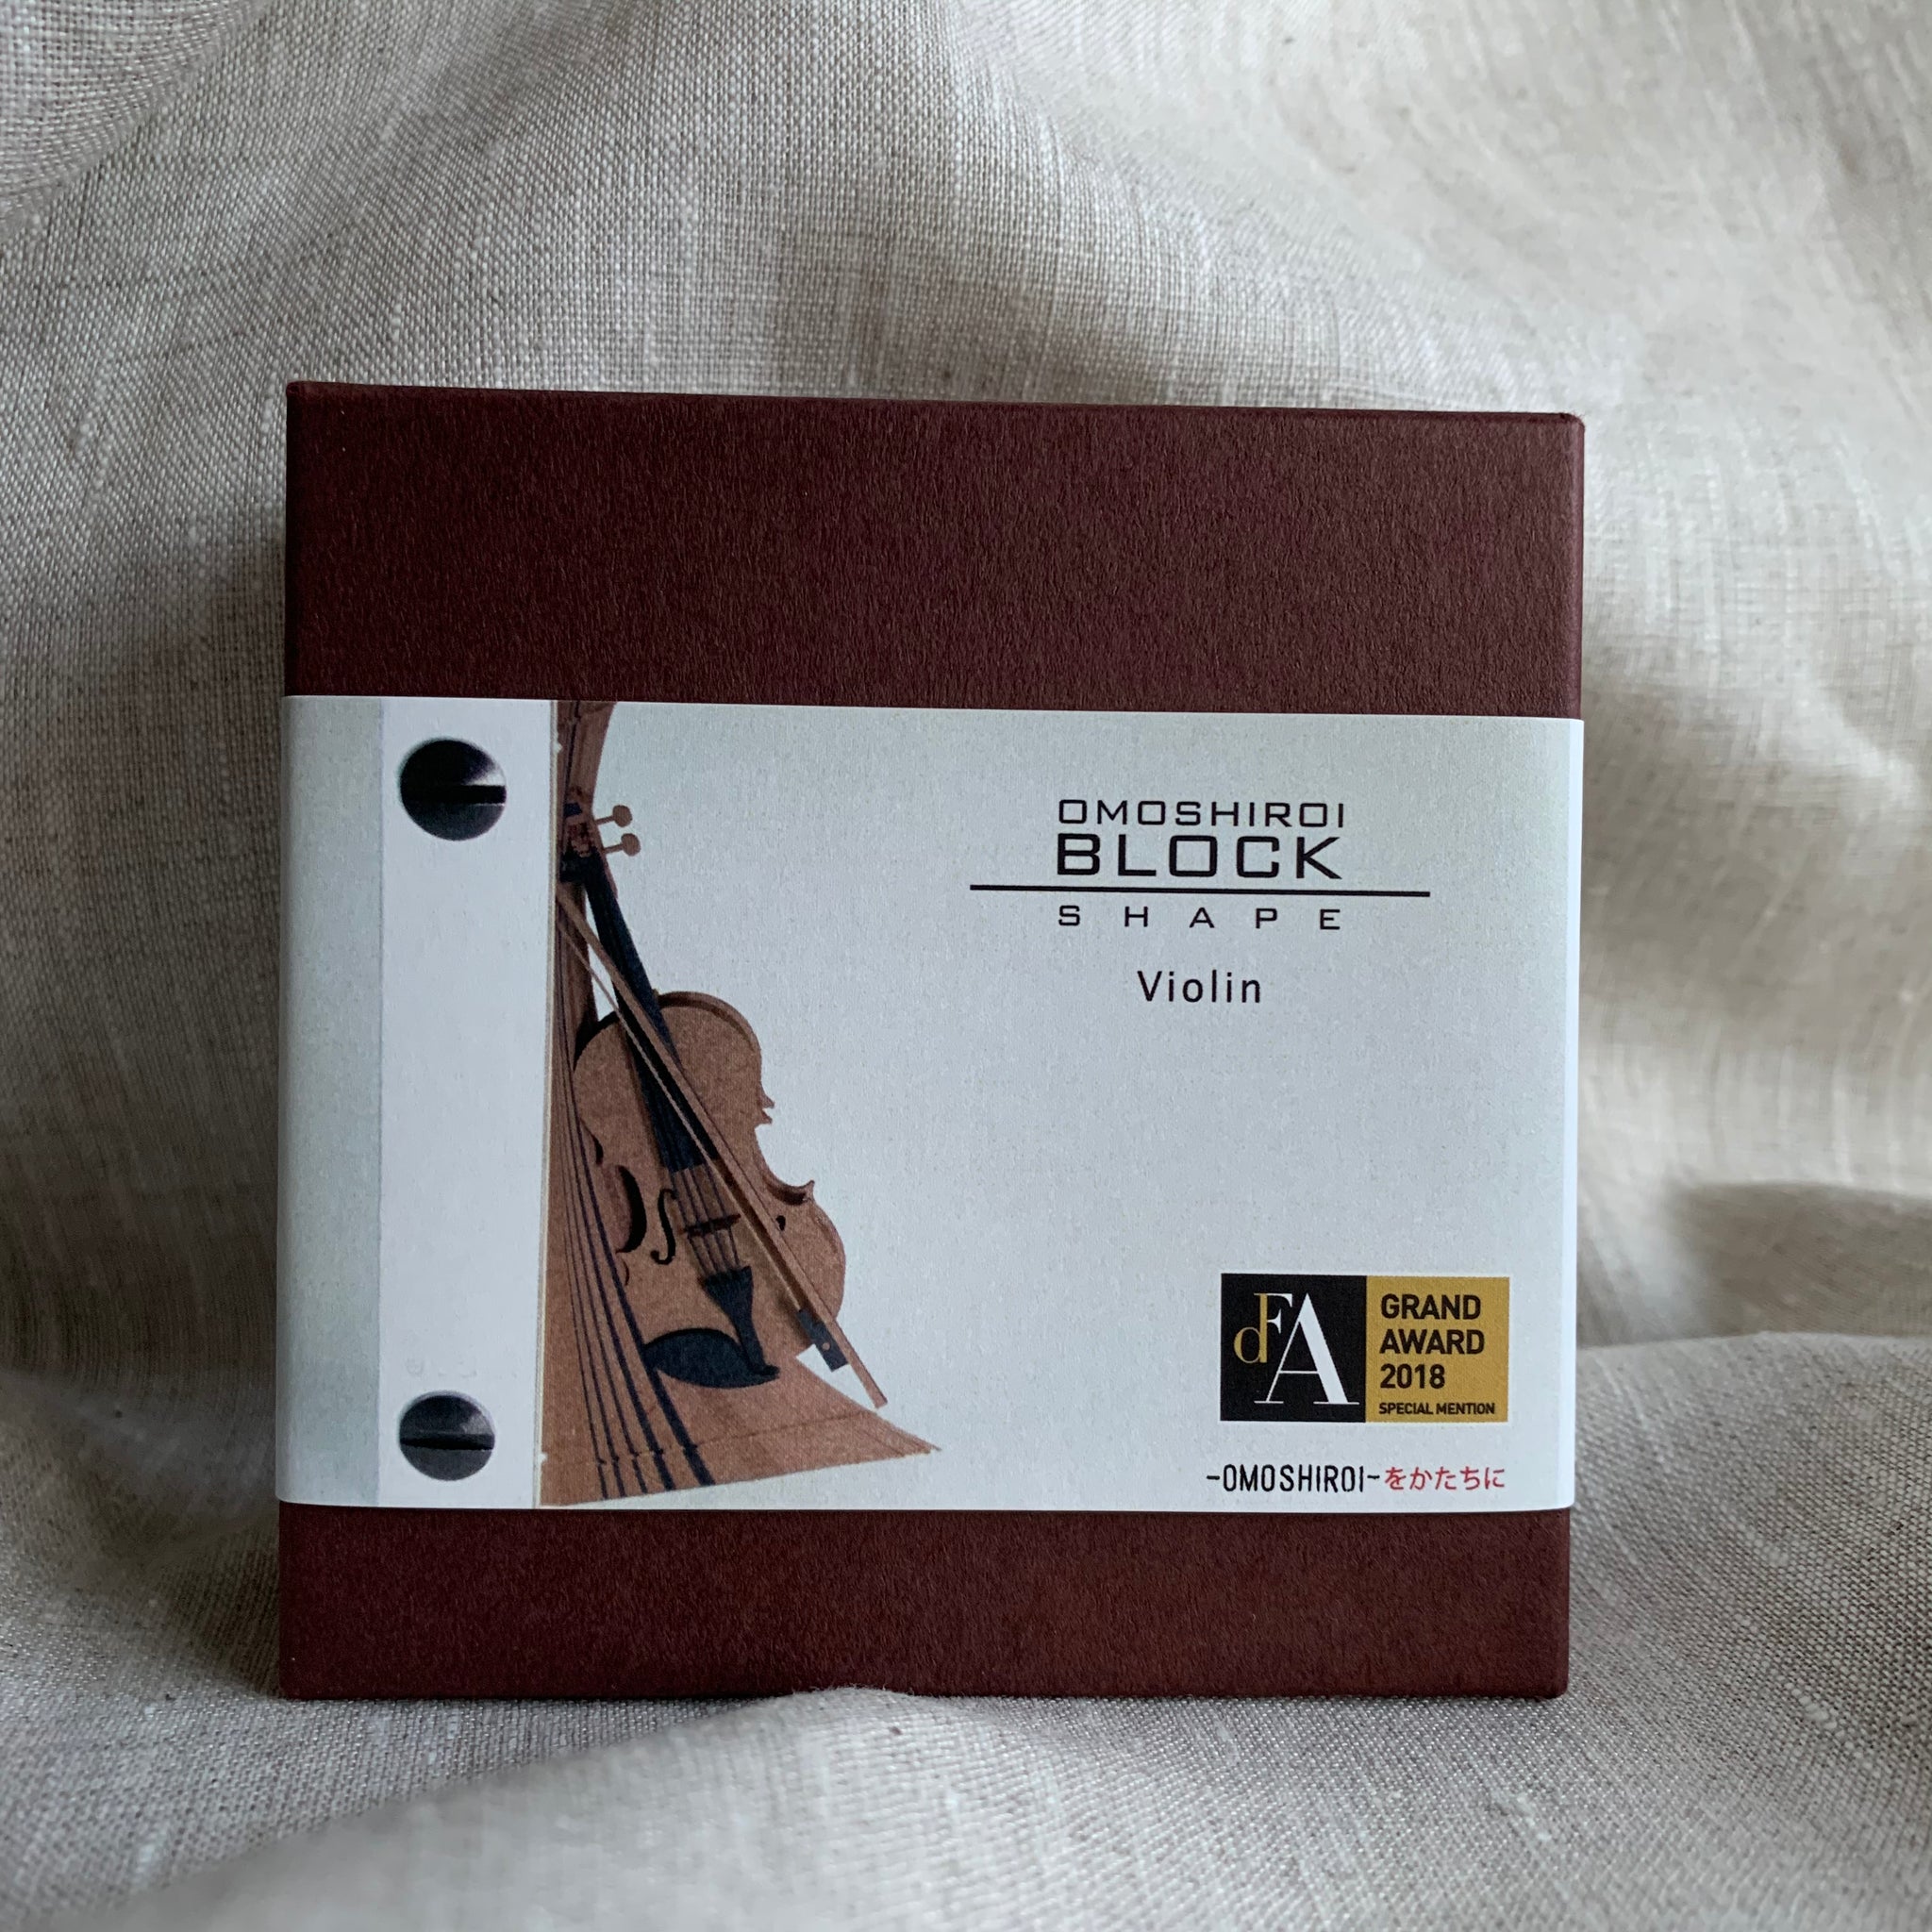 Violin - Genuine Omoshiroi Block